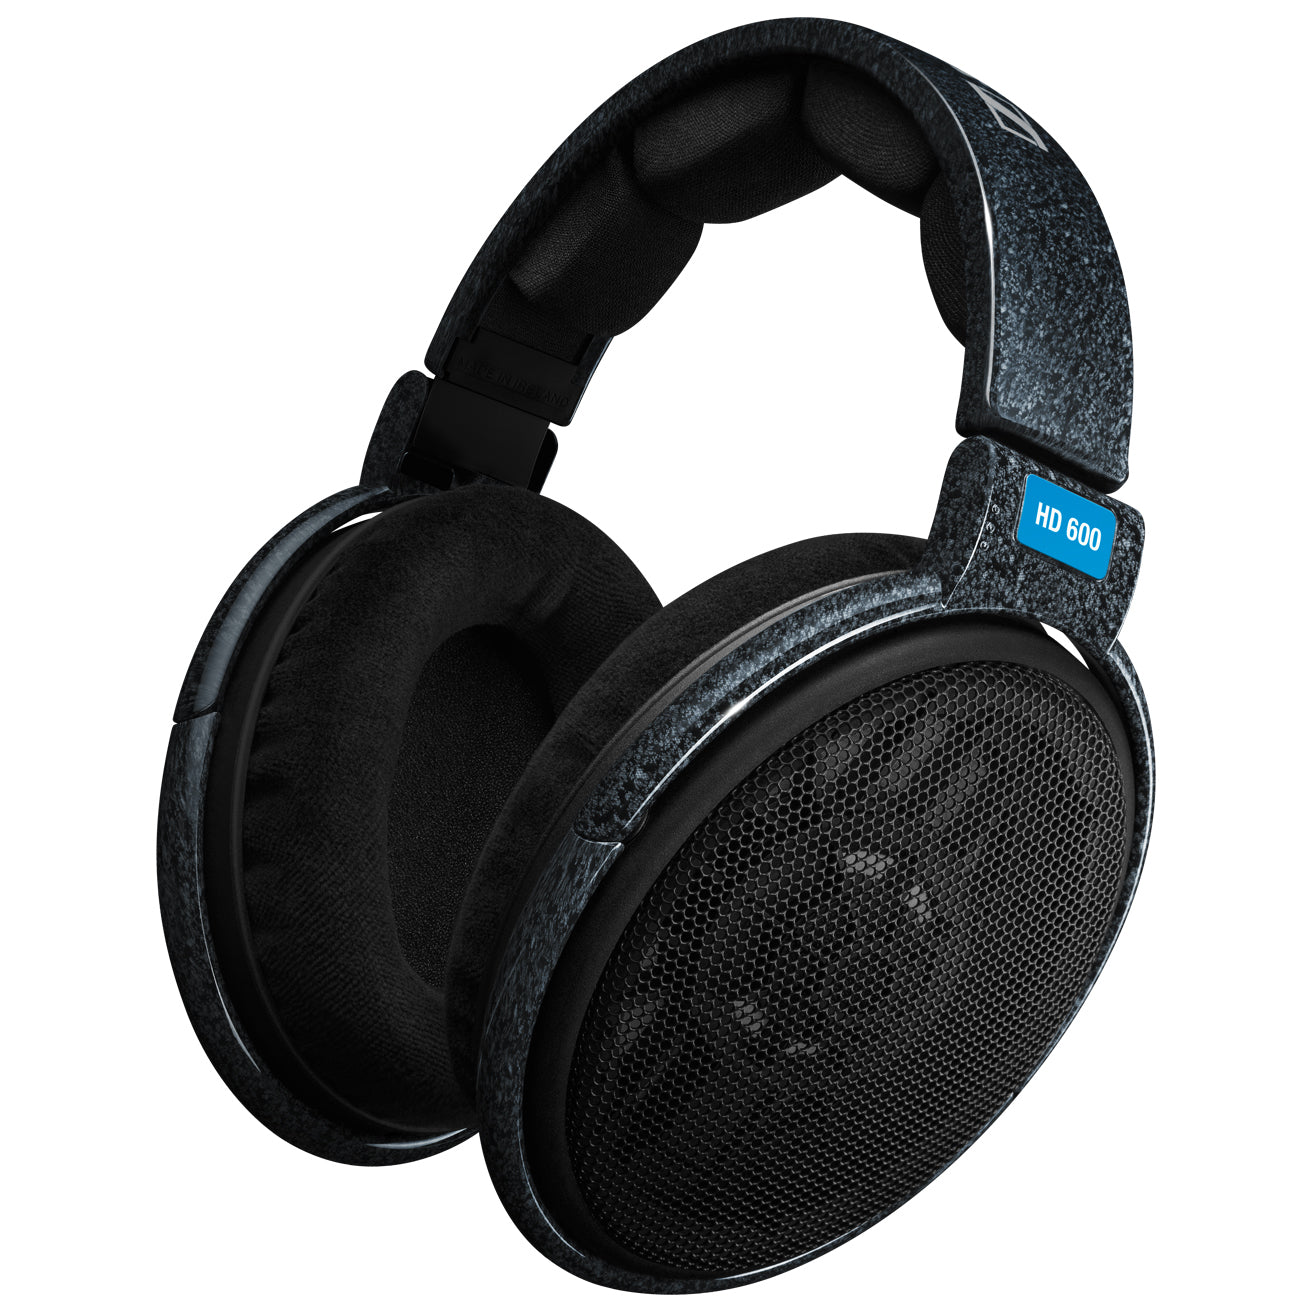 Sennheiser HD 600 Over Ear Headphone - Black